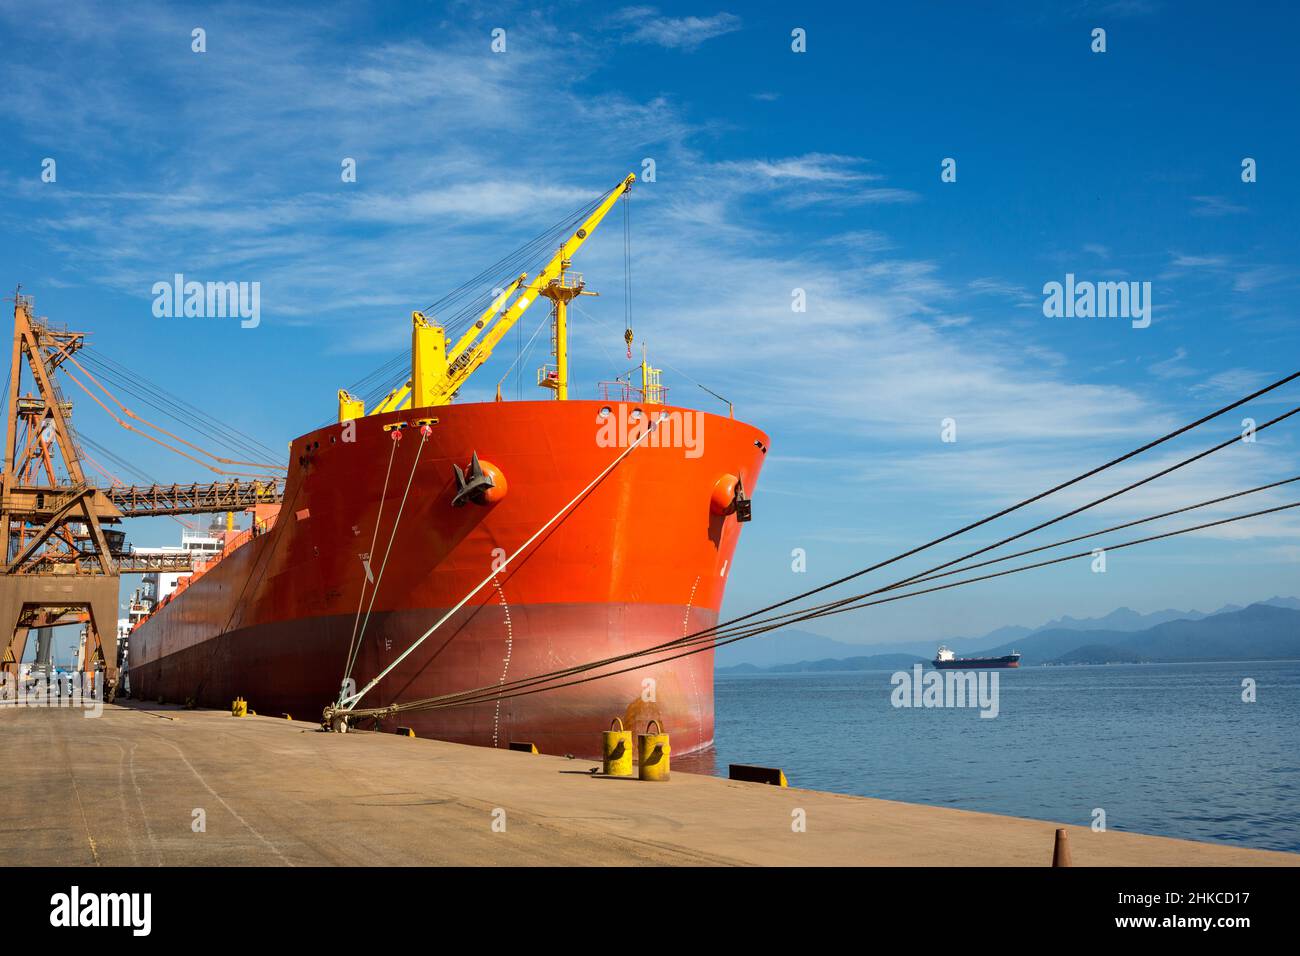 Barco de transporte a granel fotografías e imágenes de alta resolución -  Alamy